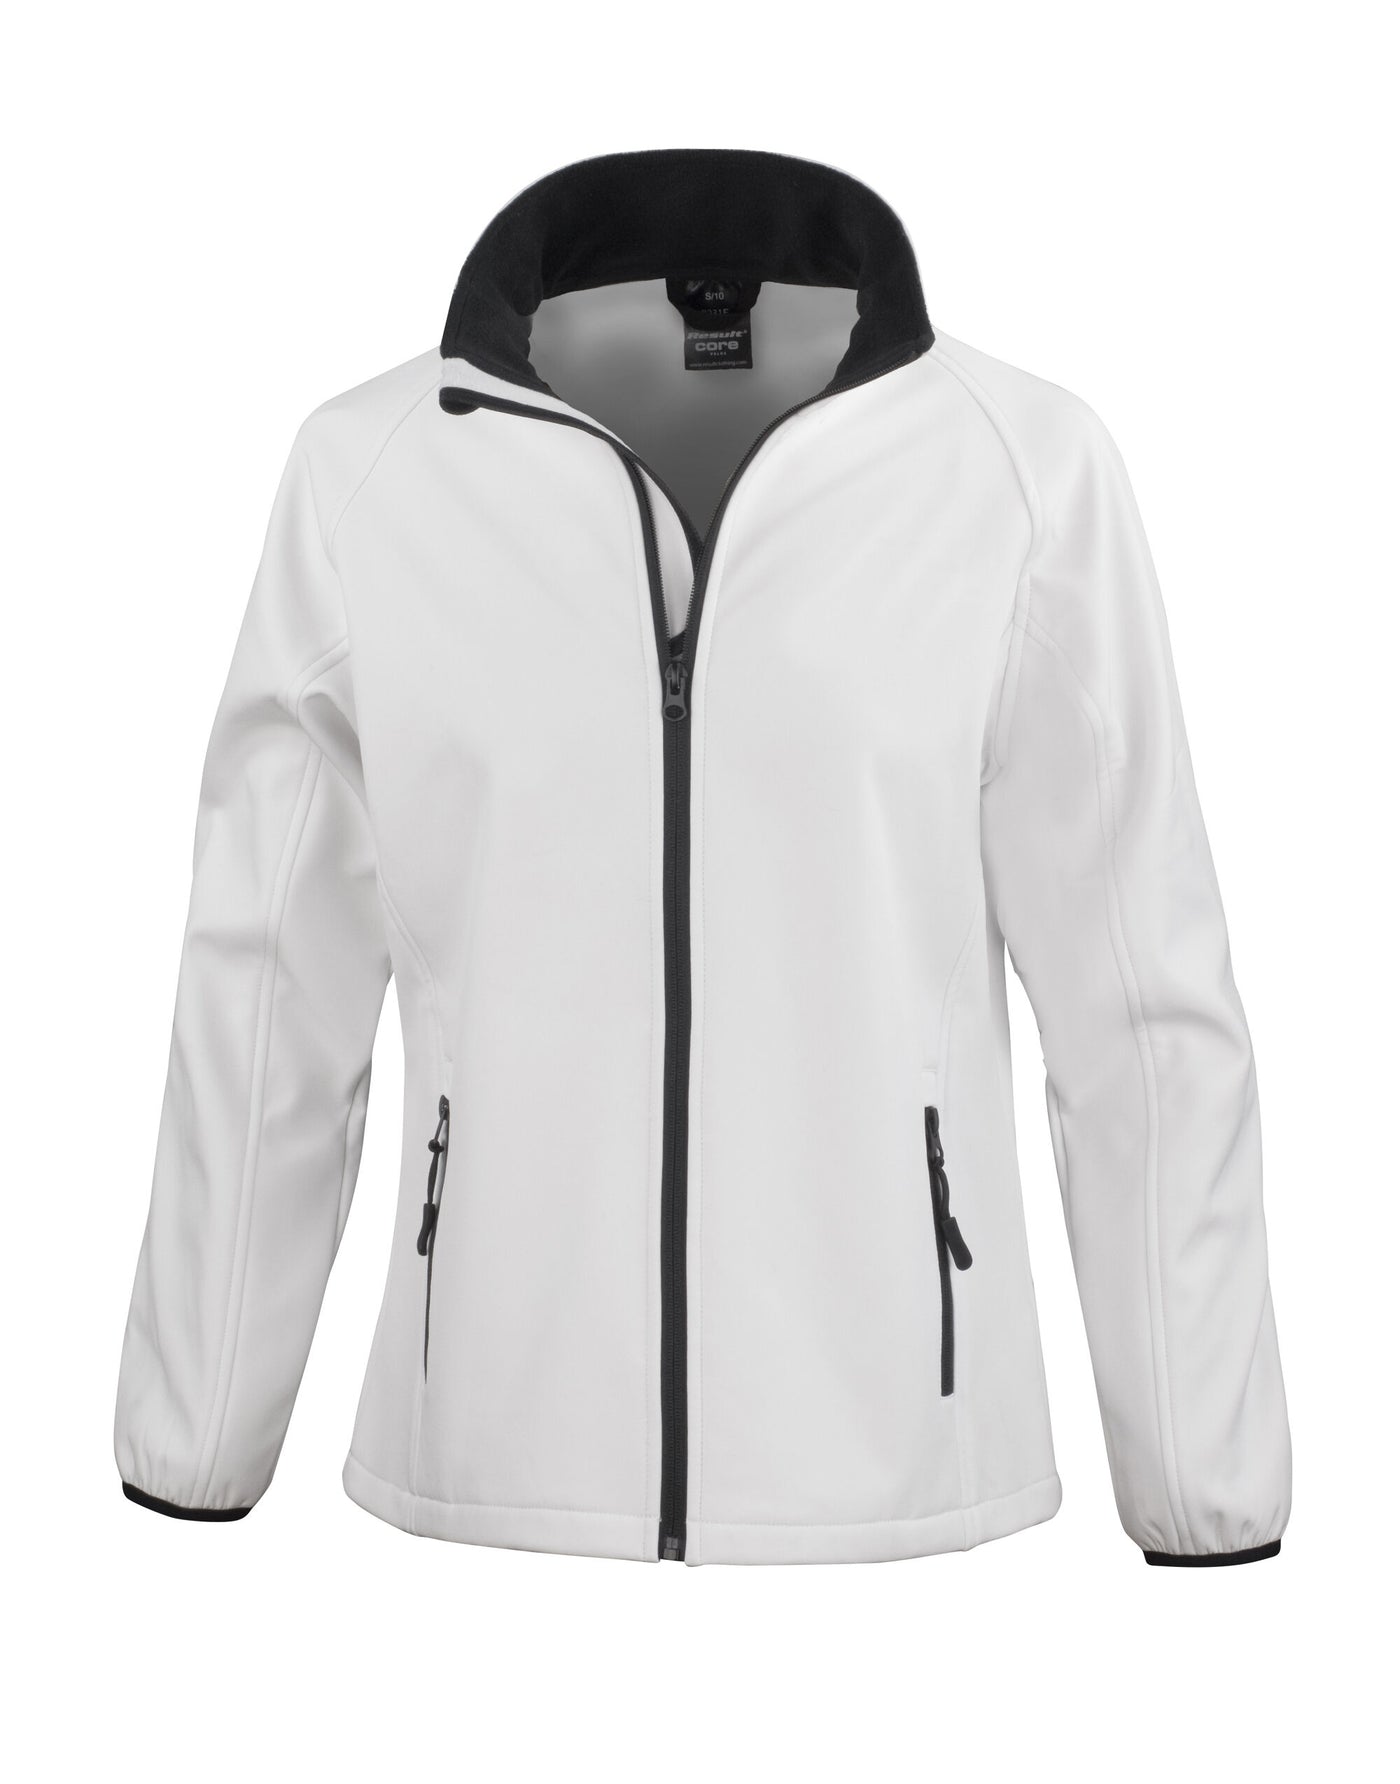 Ladies Printable Soft Shell Jacket In White Black